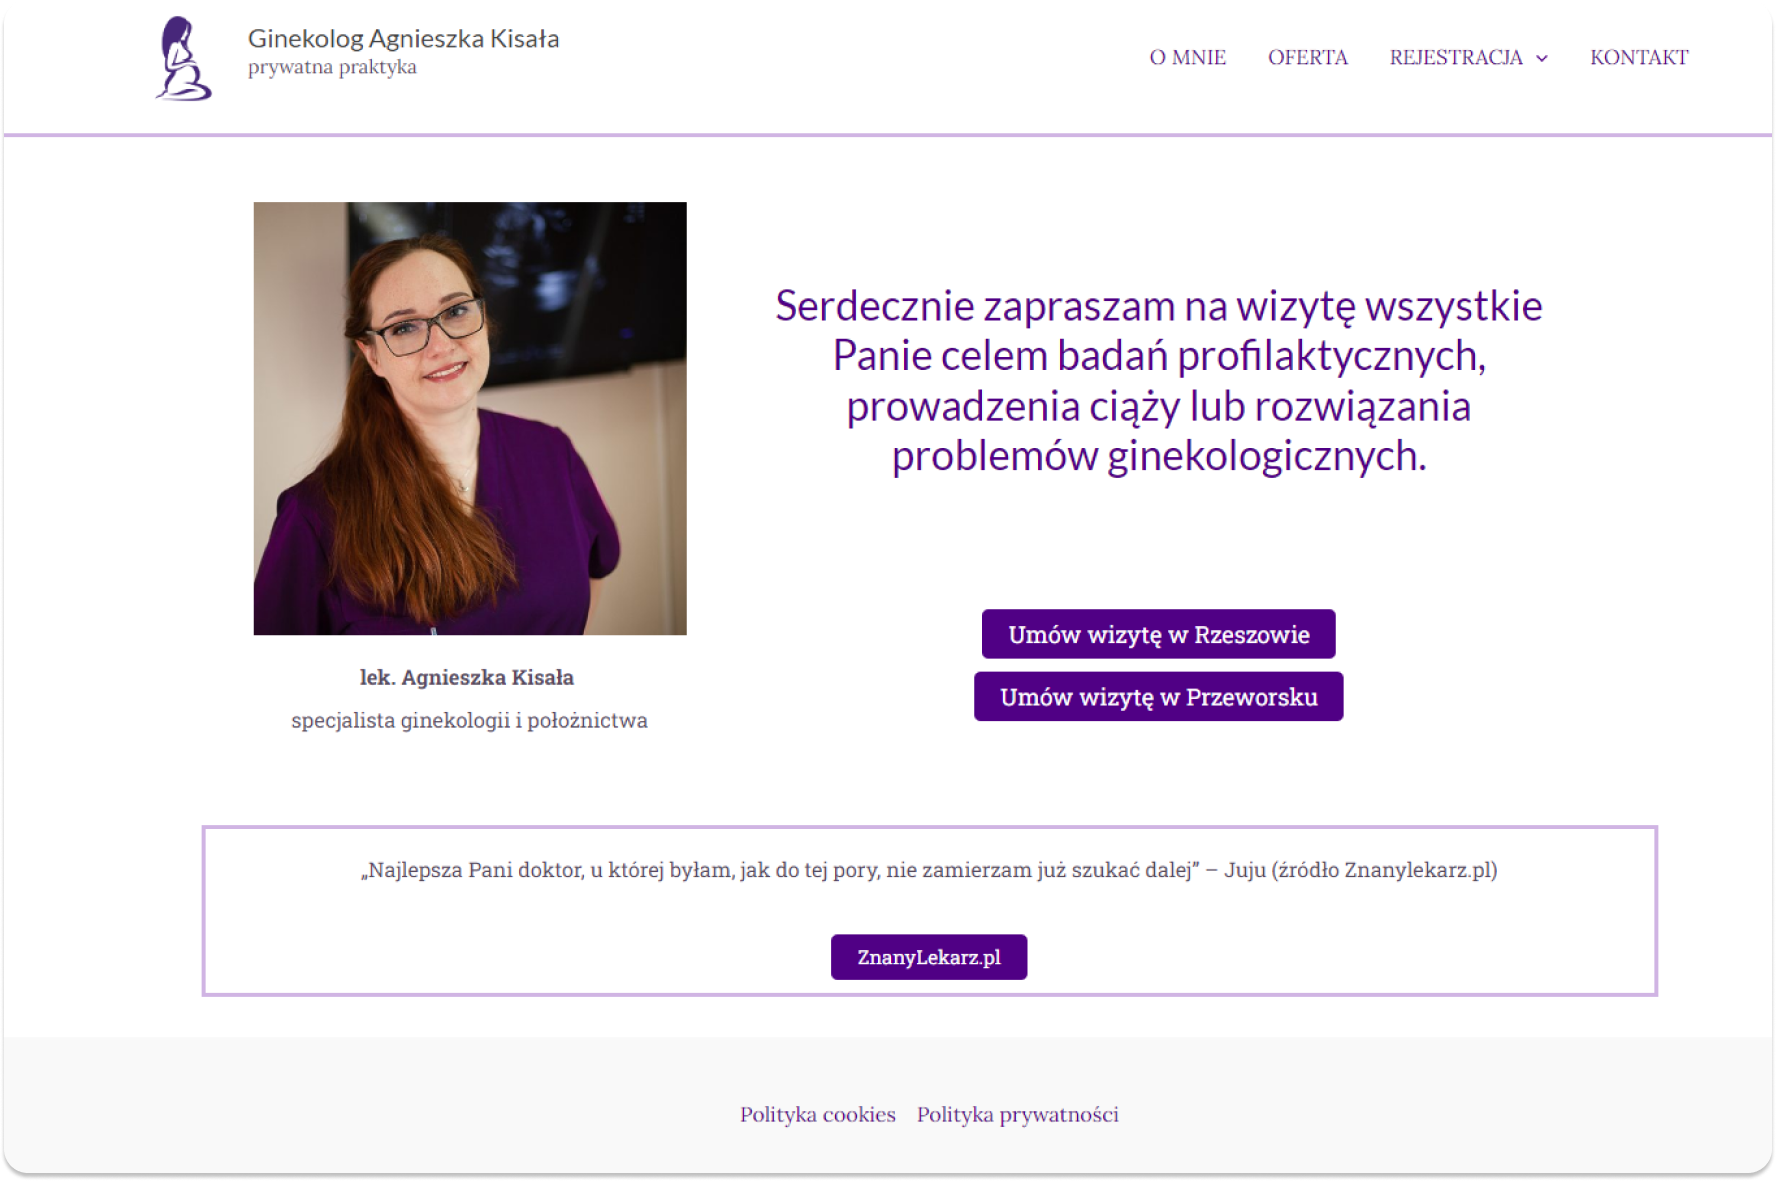 ginekolog-akisala.pl